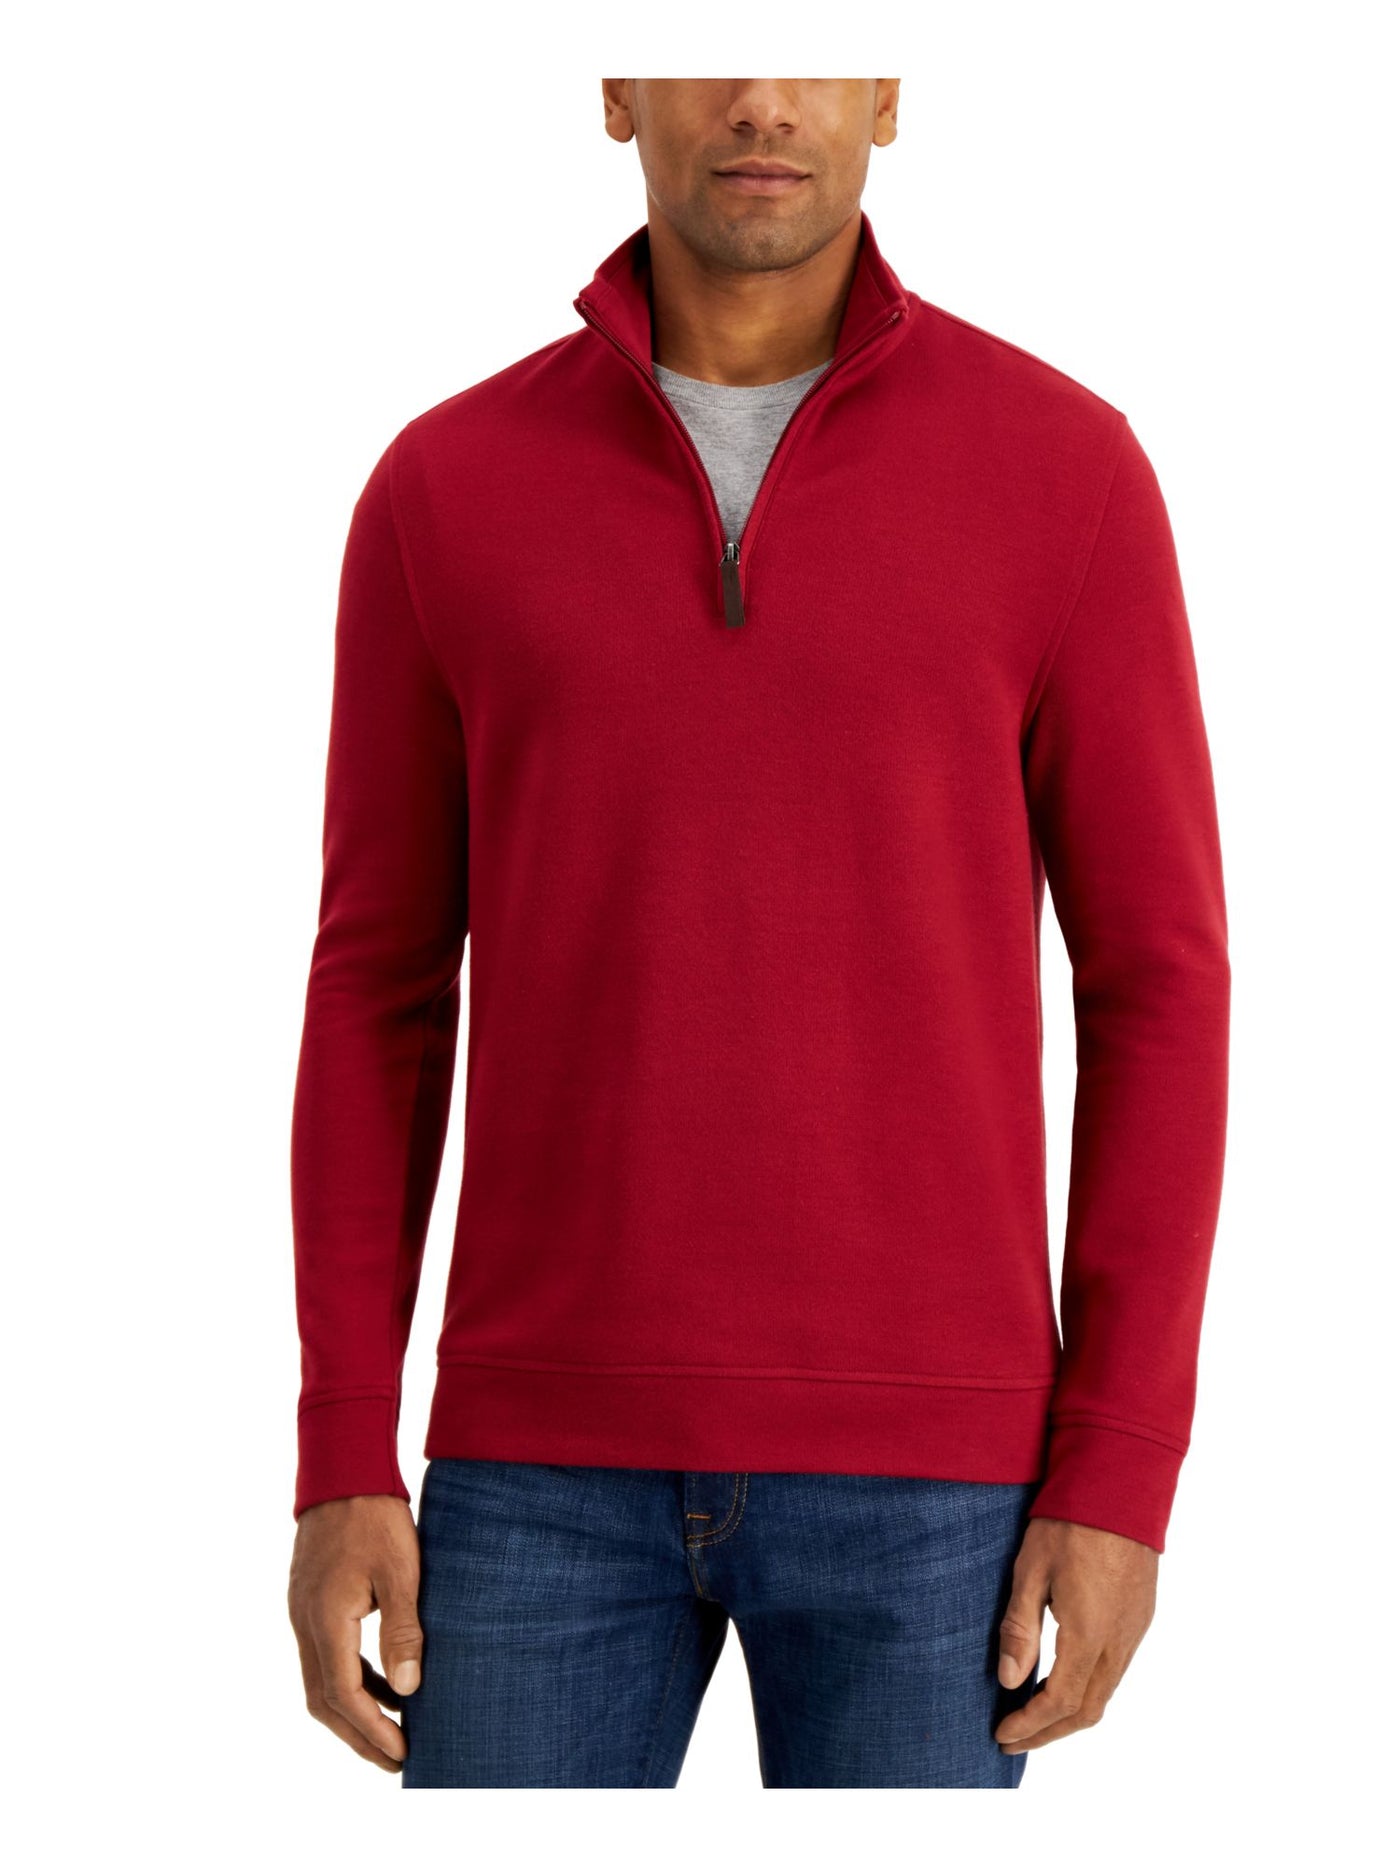 TASSO ELBA Mens Red Mock Quarter-Zip Pullover Sweater XXL